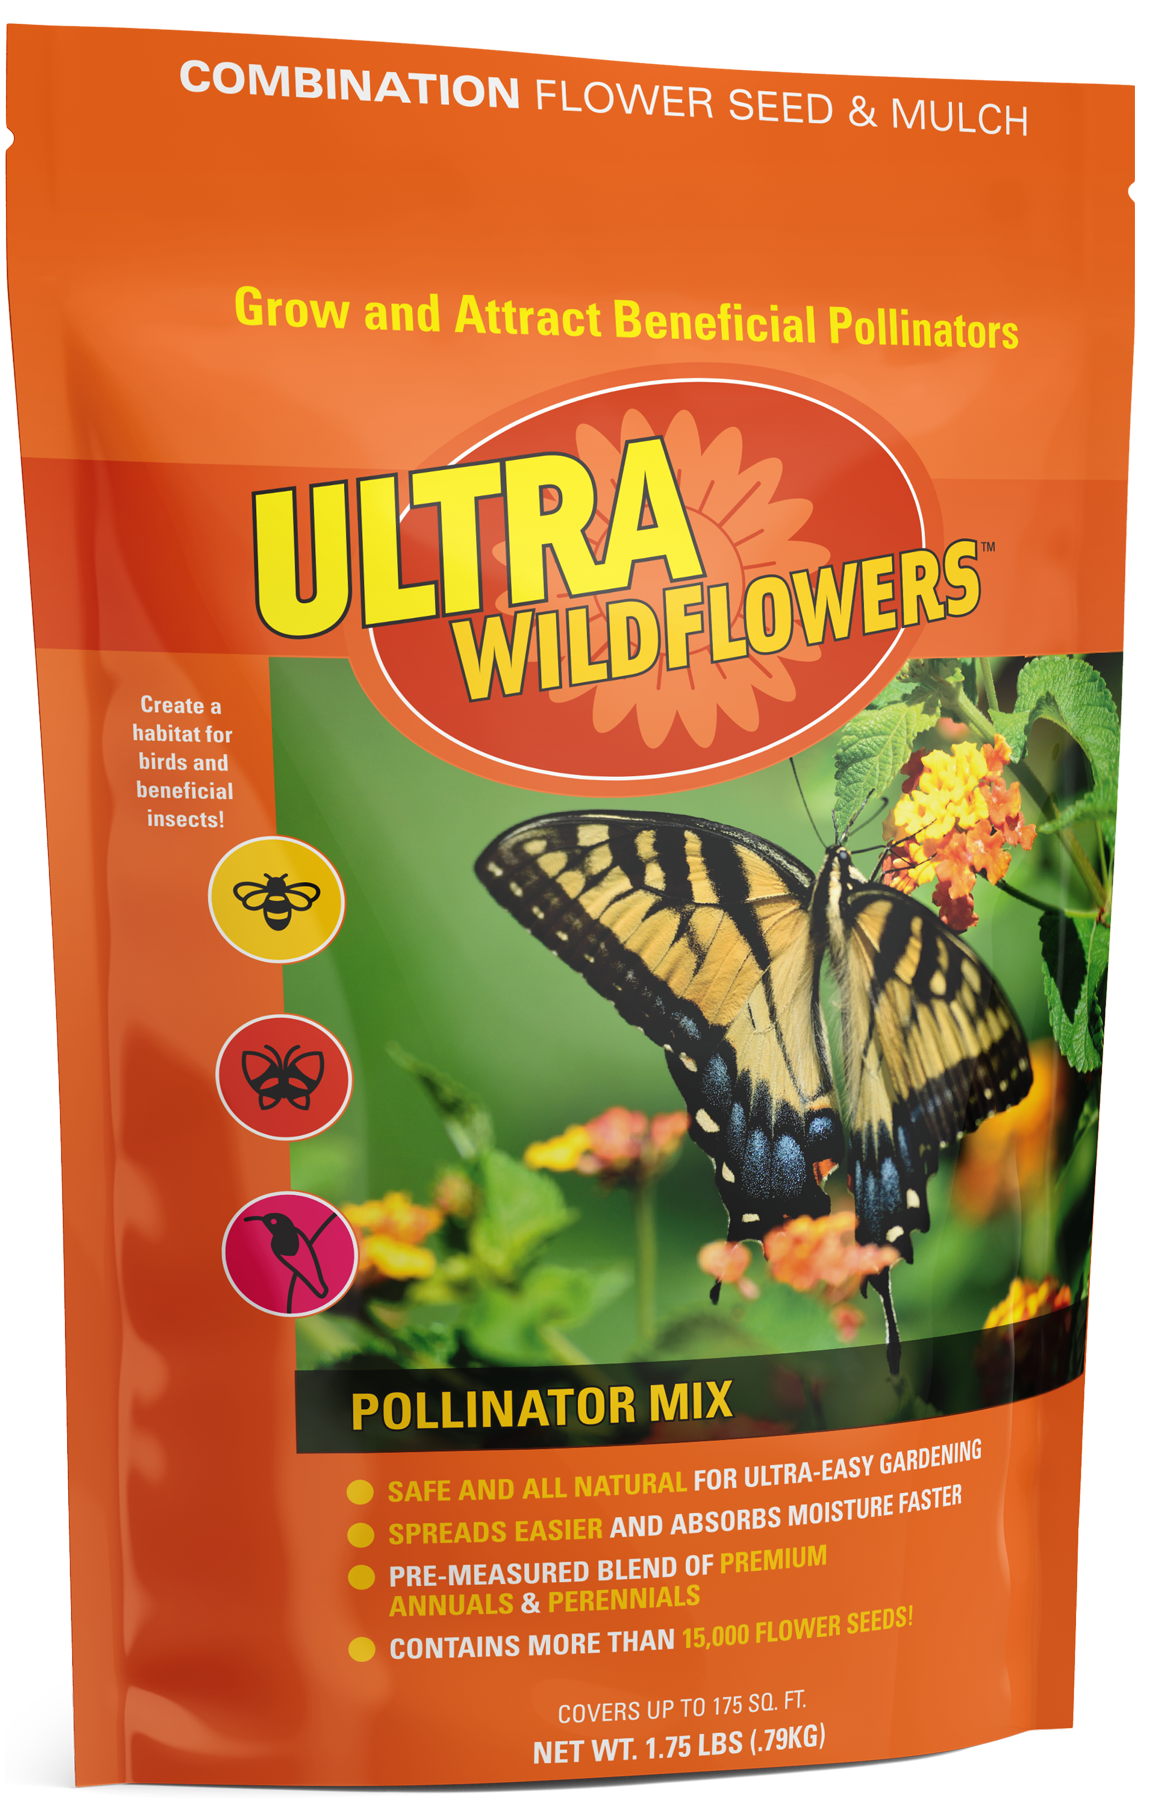 Wildflower Products - Amturf Enterprises LLC